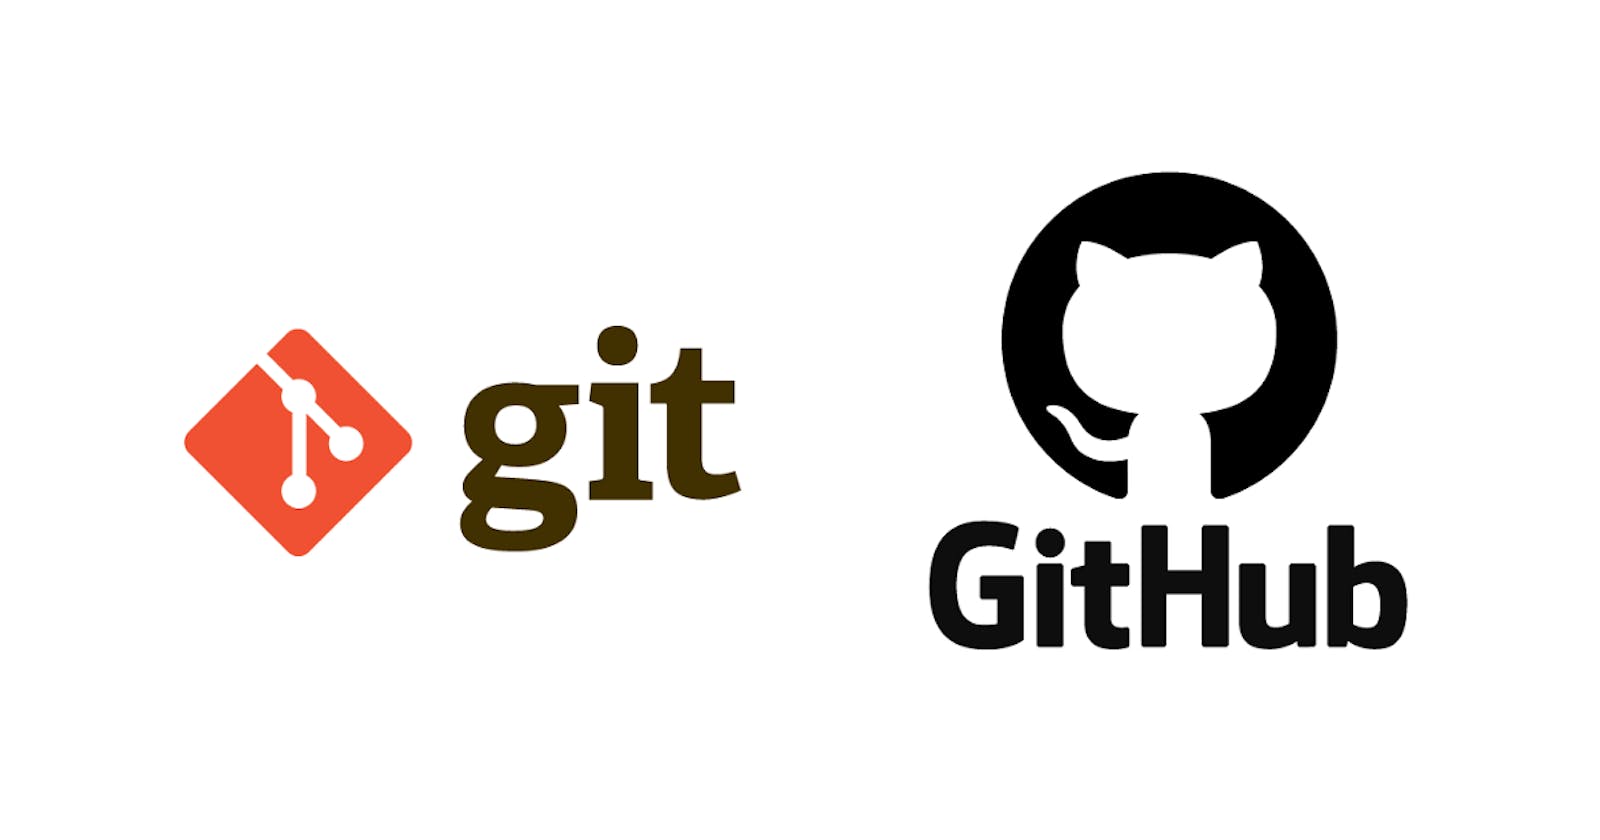 Basics Of Unix, Git & Github